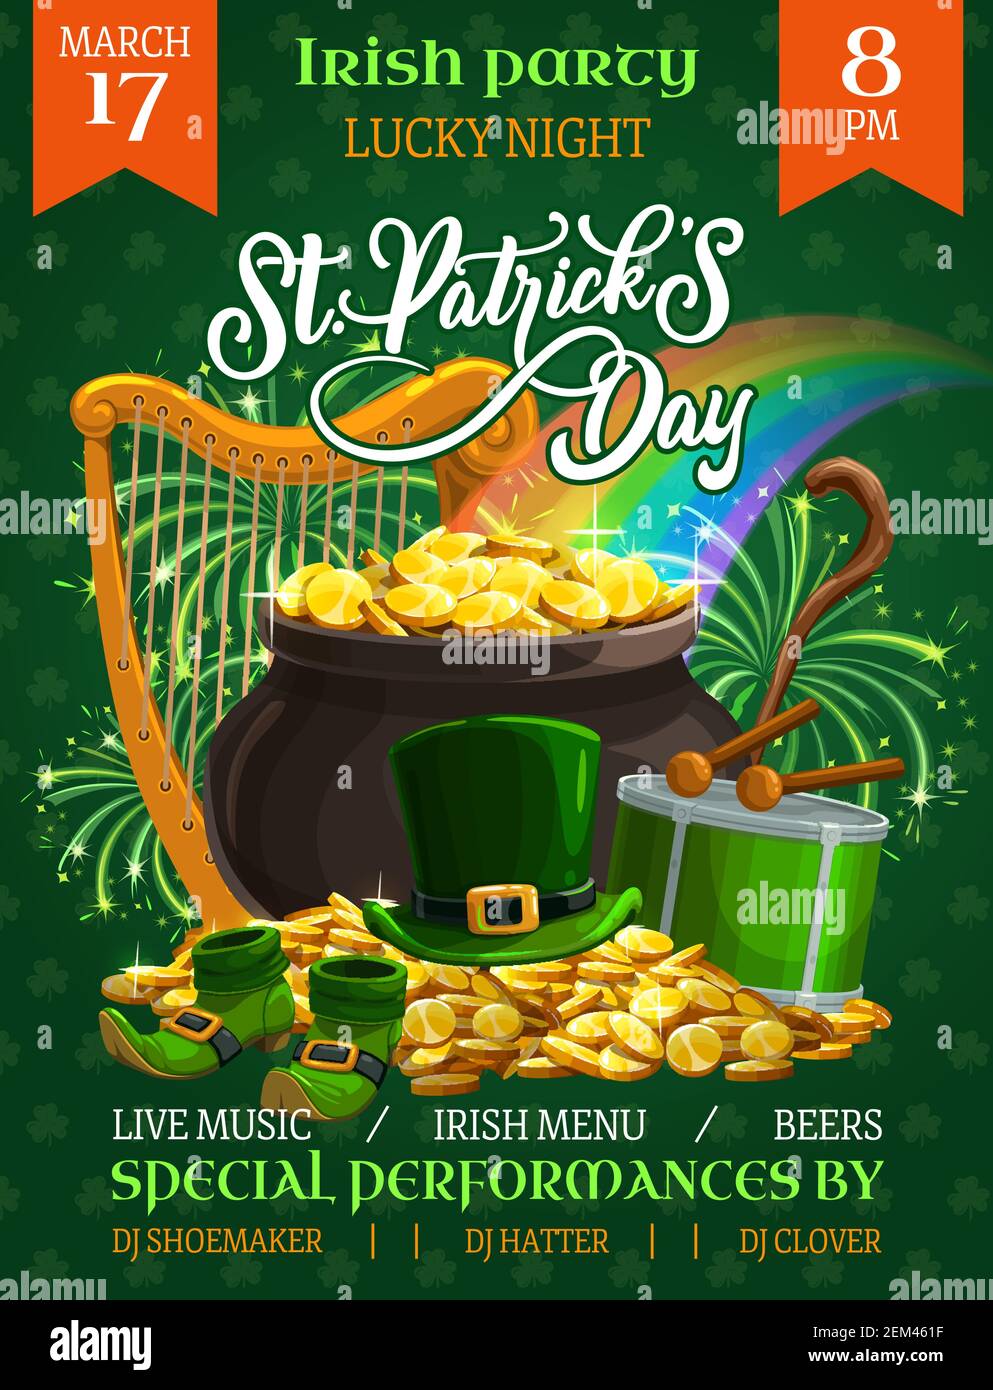 Irish saint patricks day party poster template Vector Image